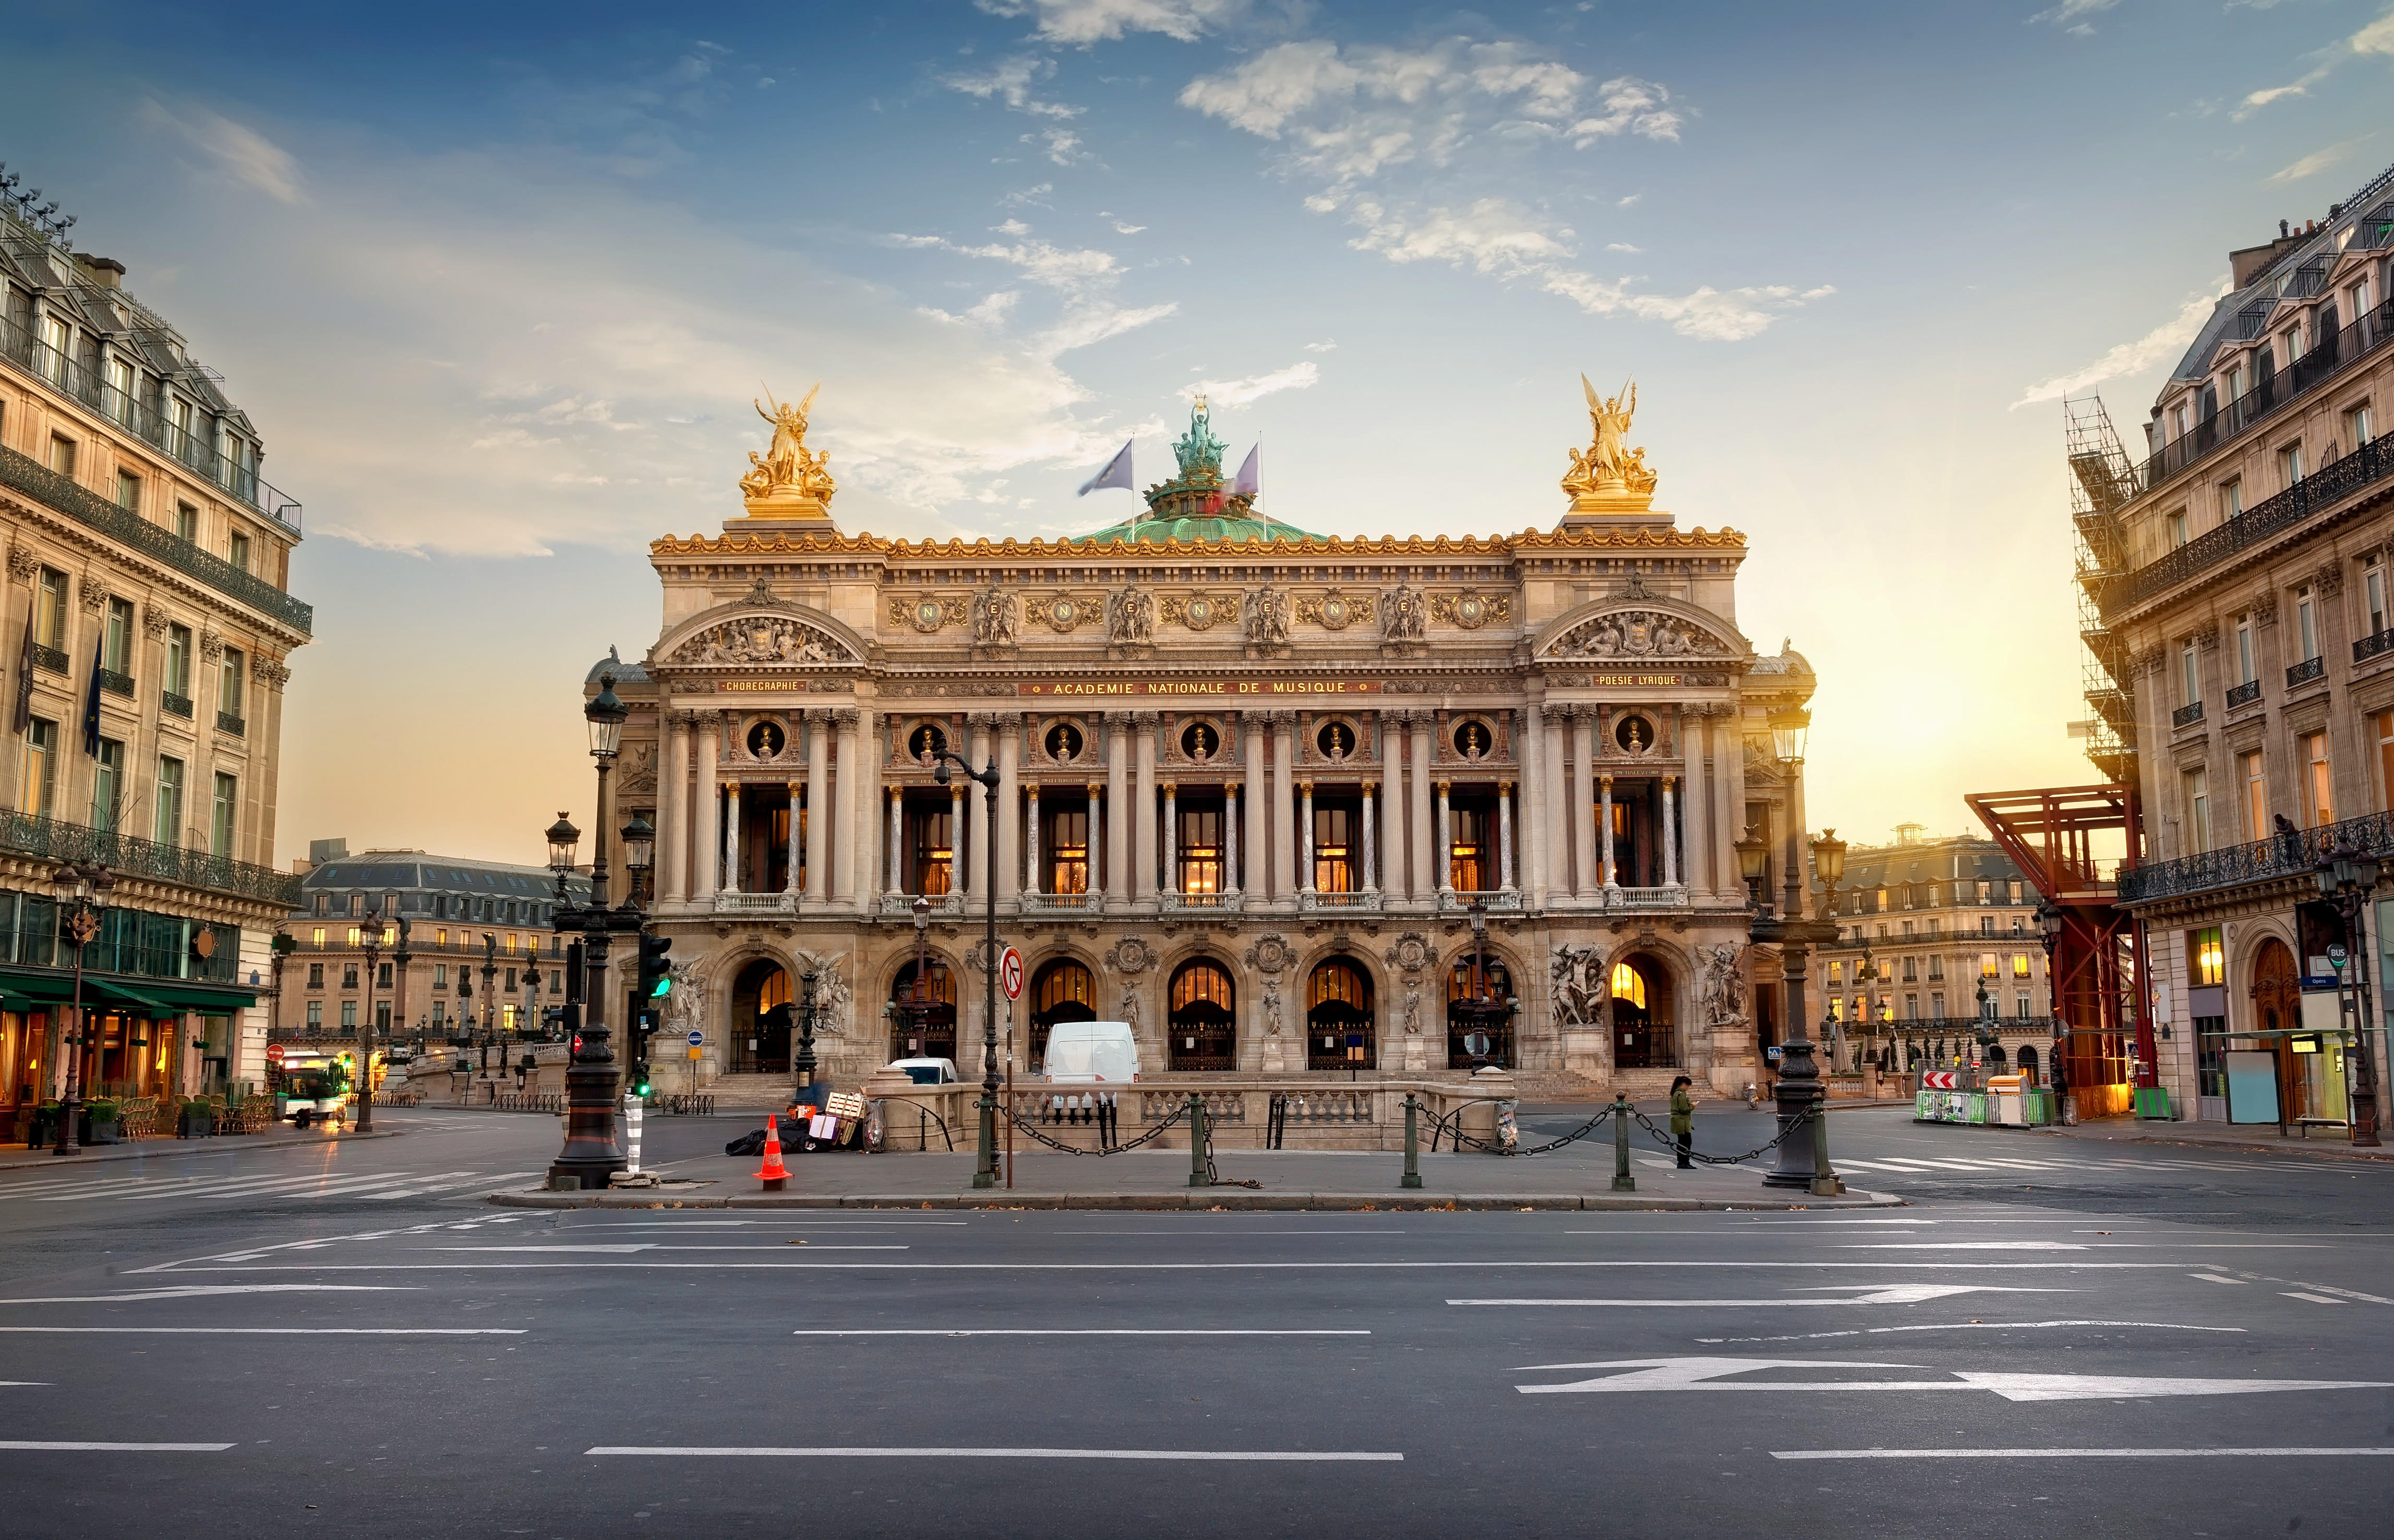 Palais Garnier (The Opéra Garnier Grand Hall)